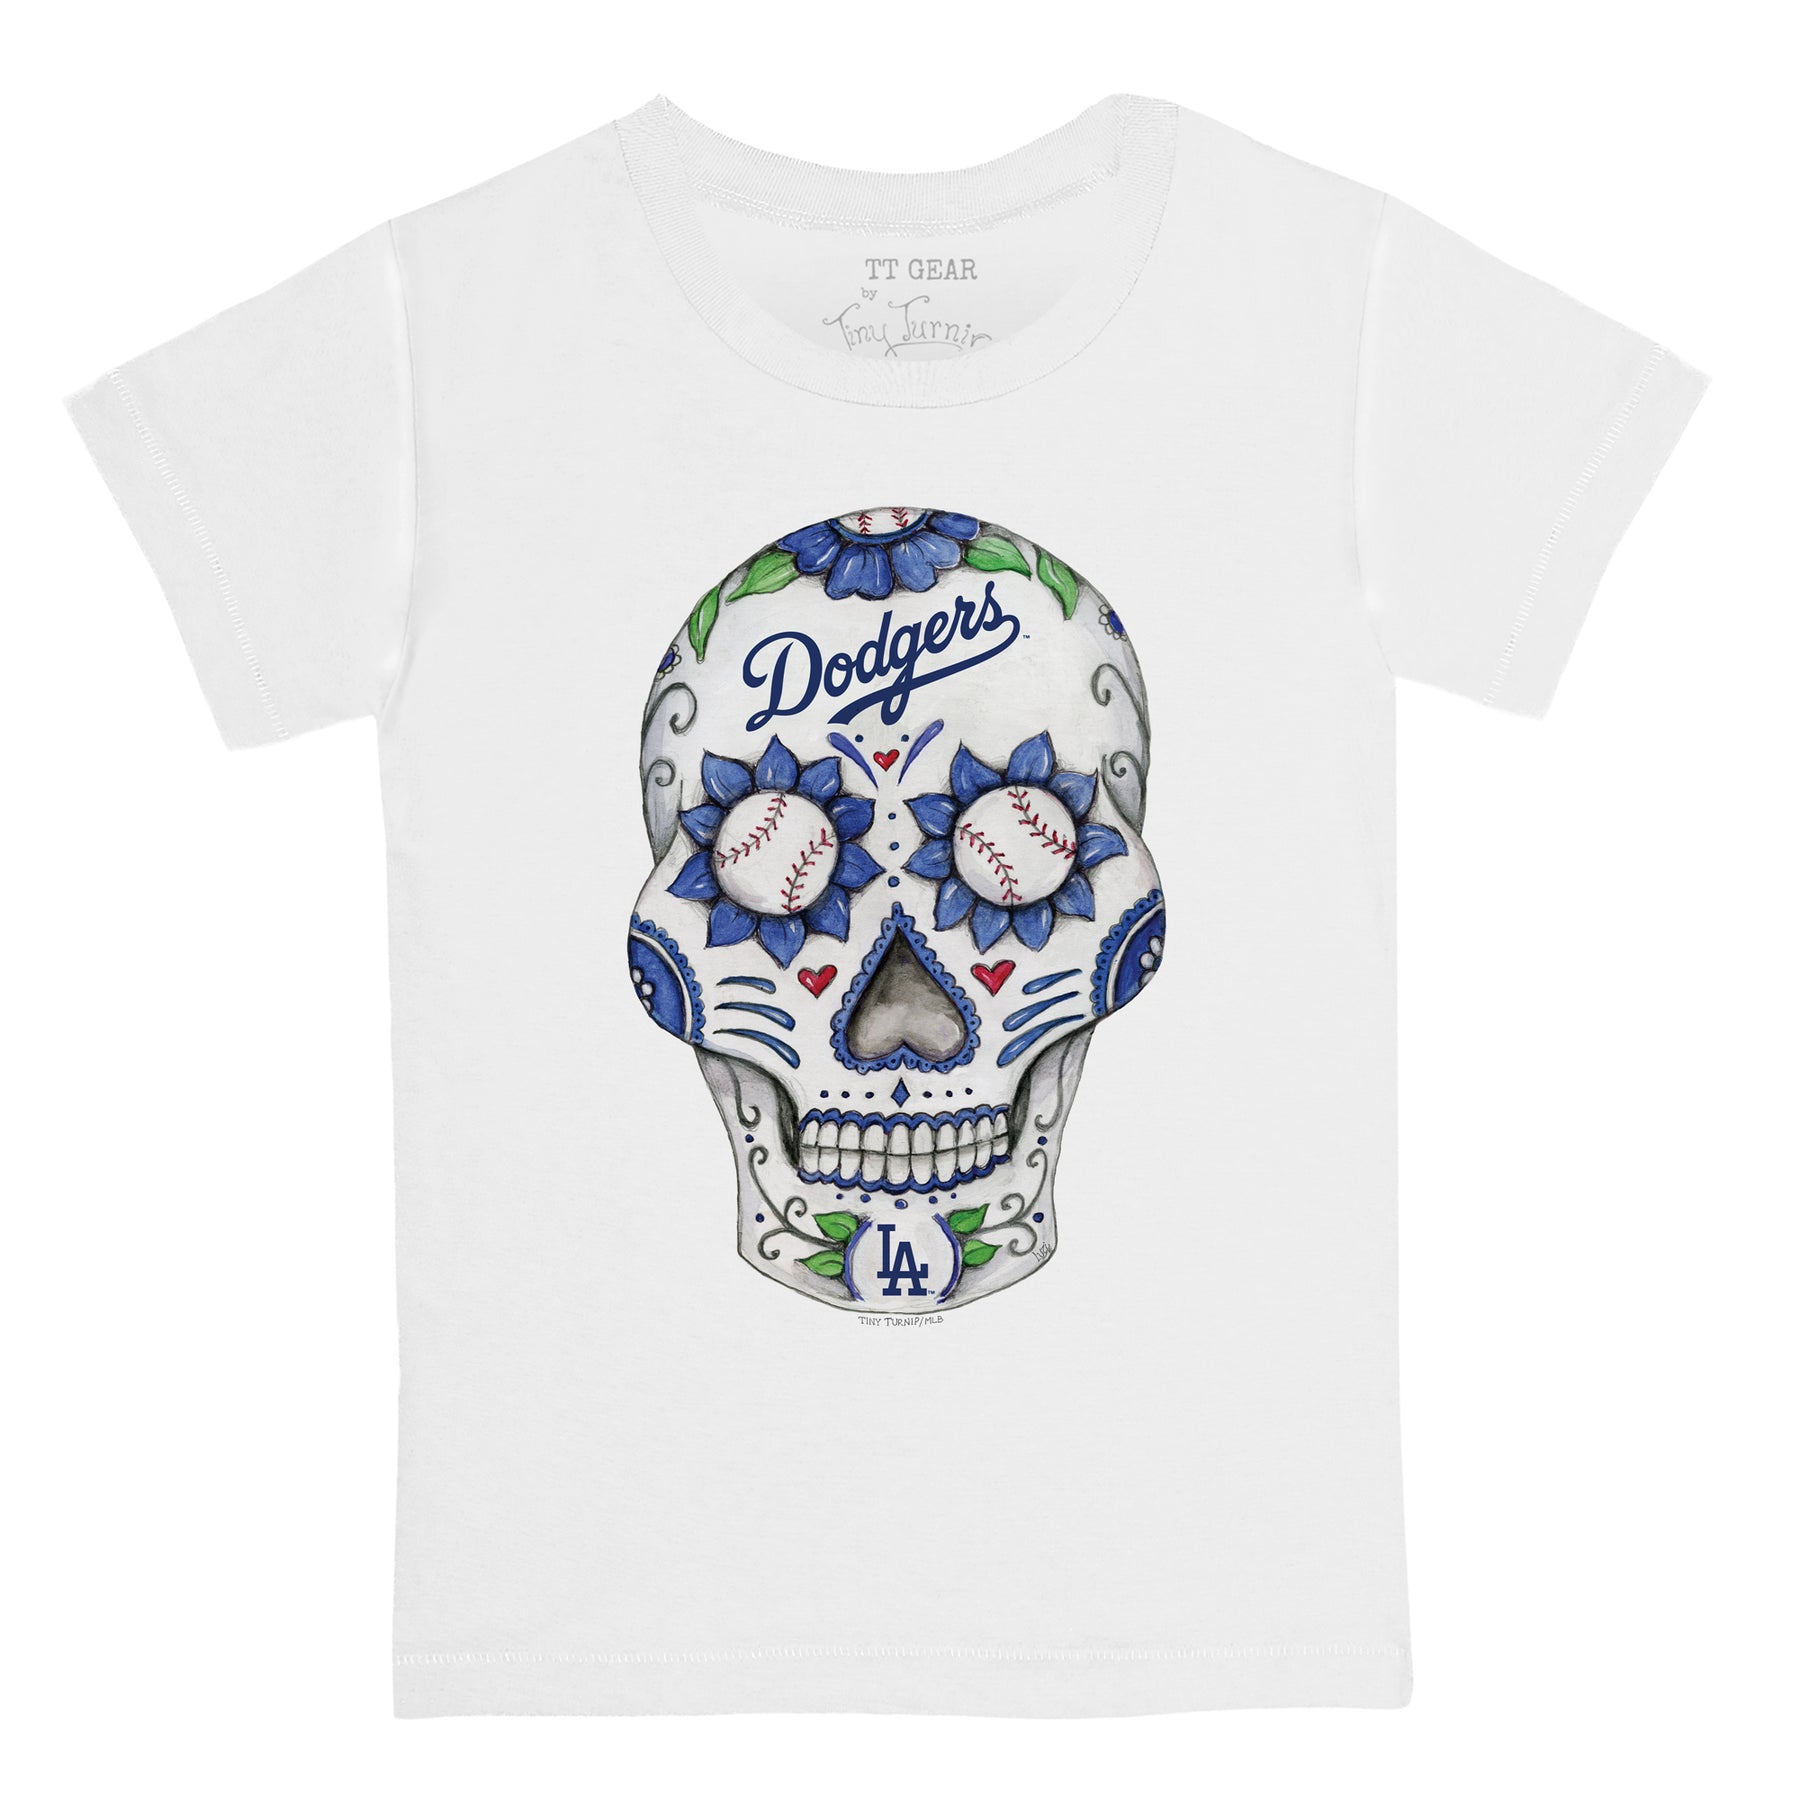 Los angeles dodgers Skull T-Shirt Short t-shirt quick drying t-shirt black  t-shirts for men